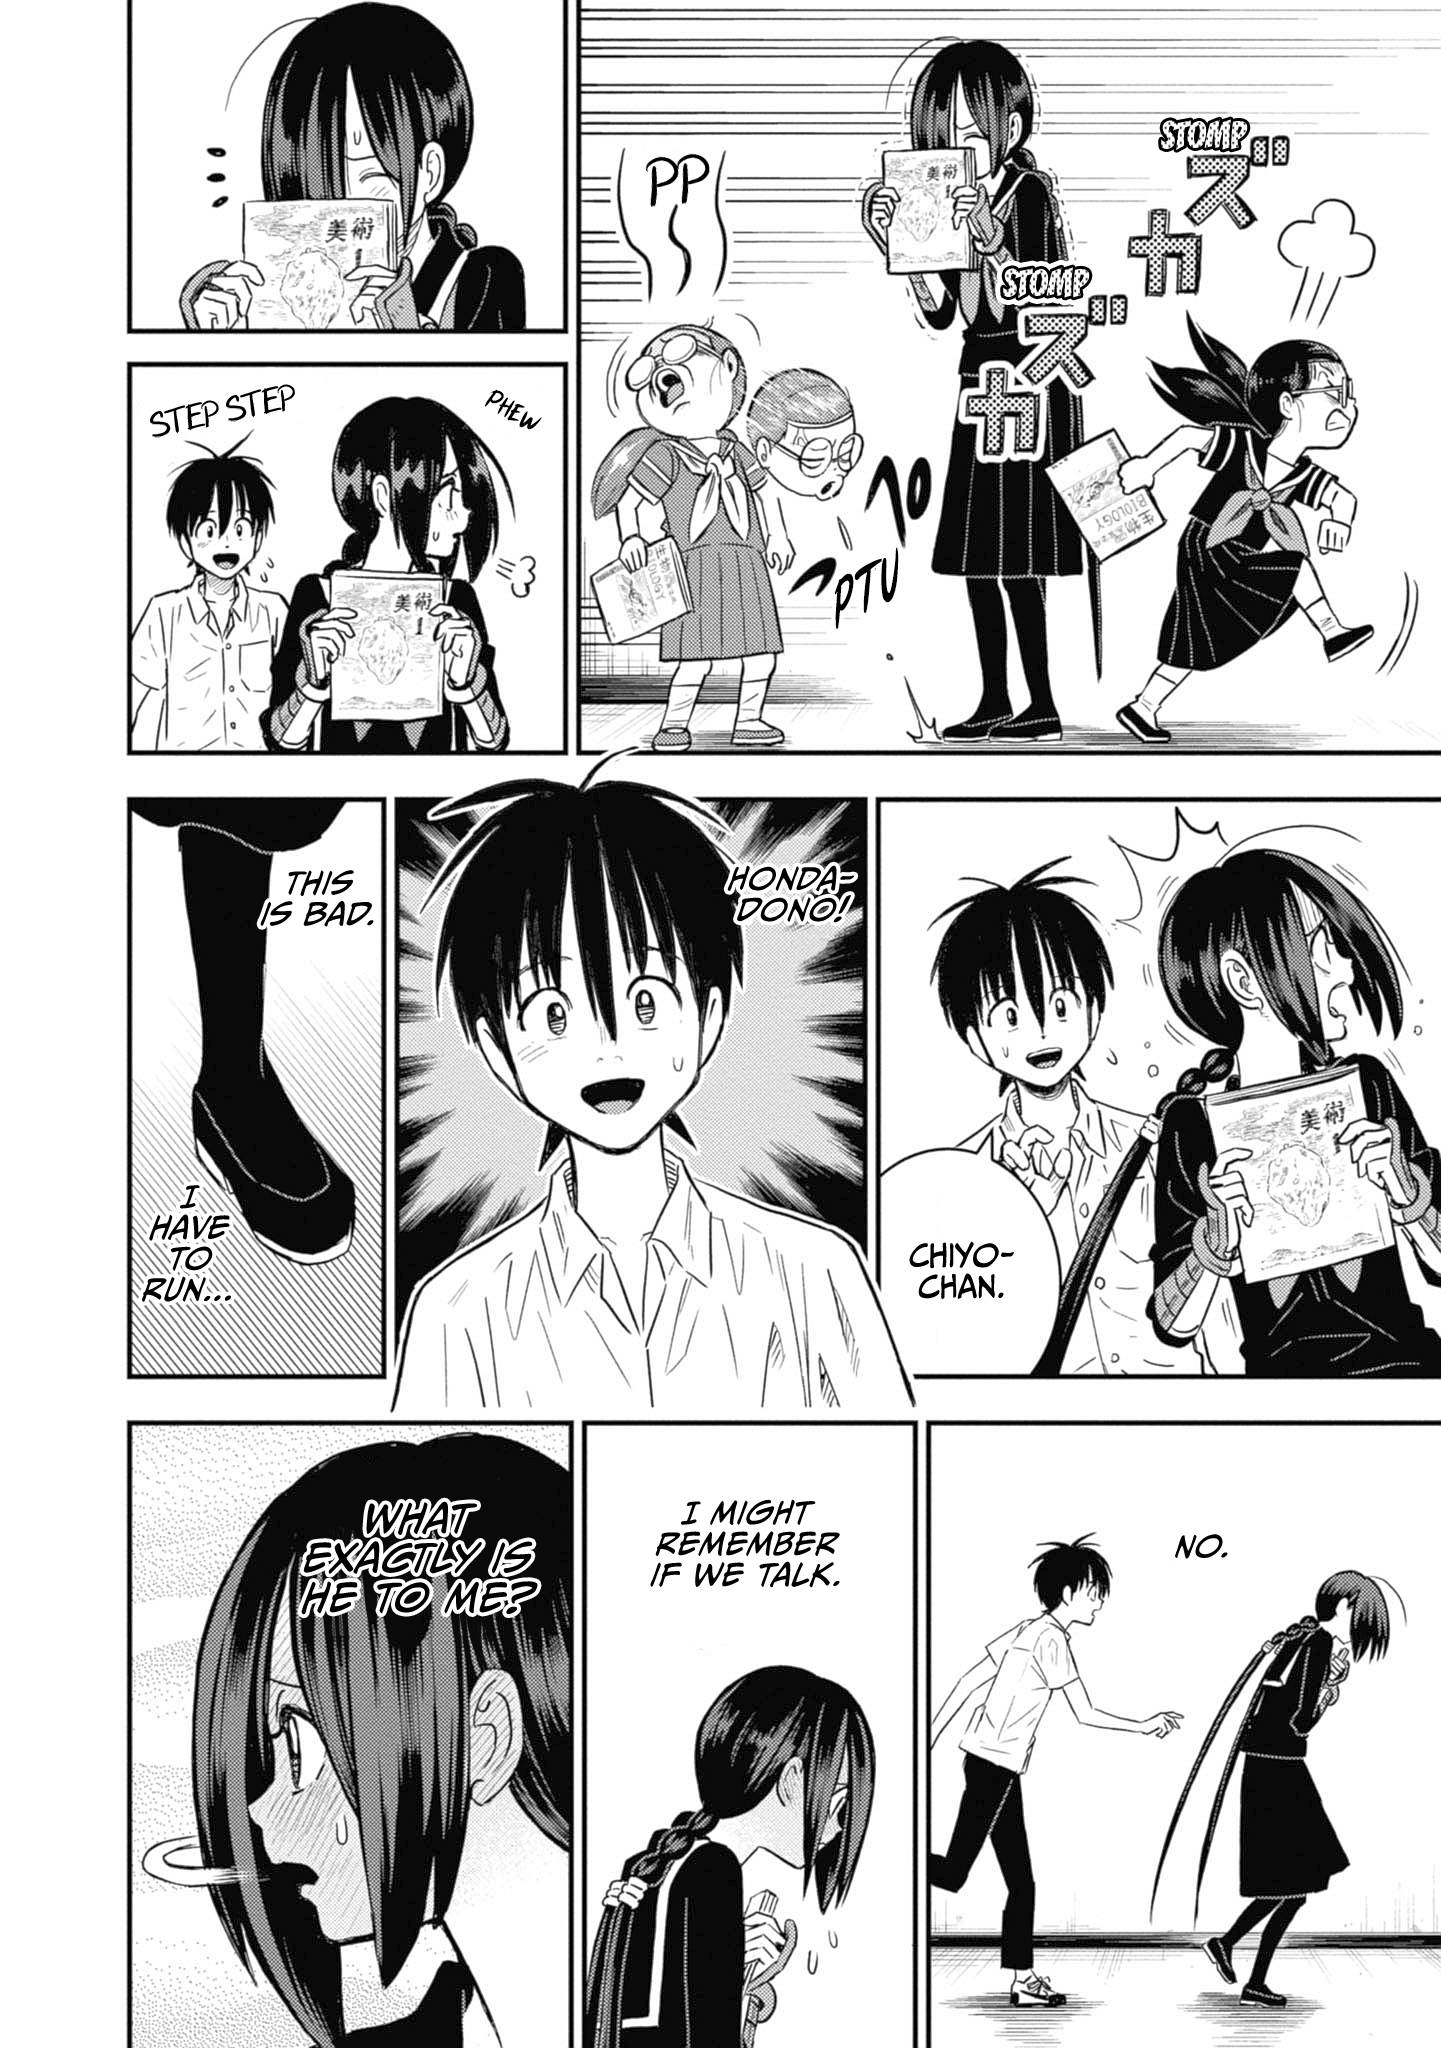 Shinobuna! Chiyo-chan - chapter 29 - #4